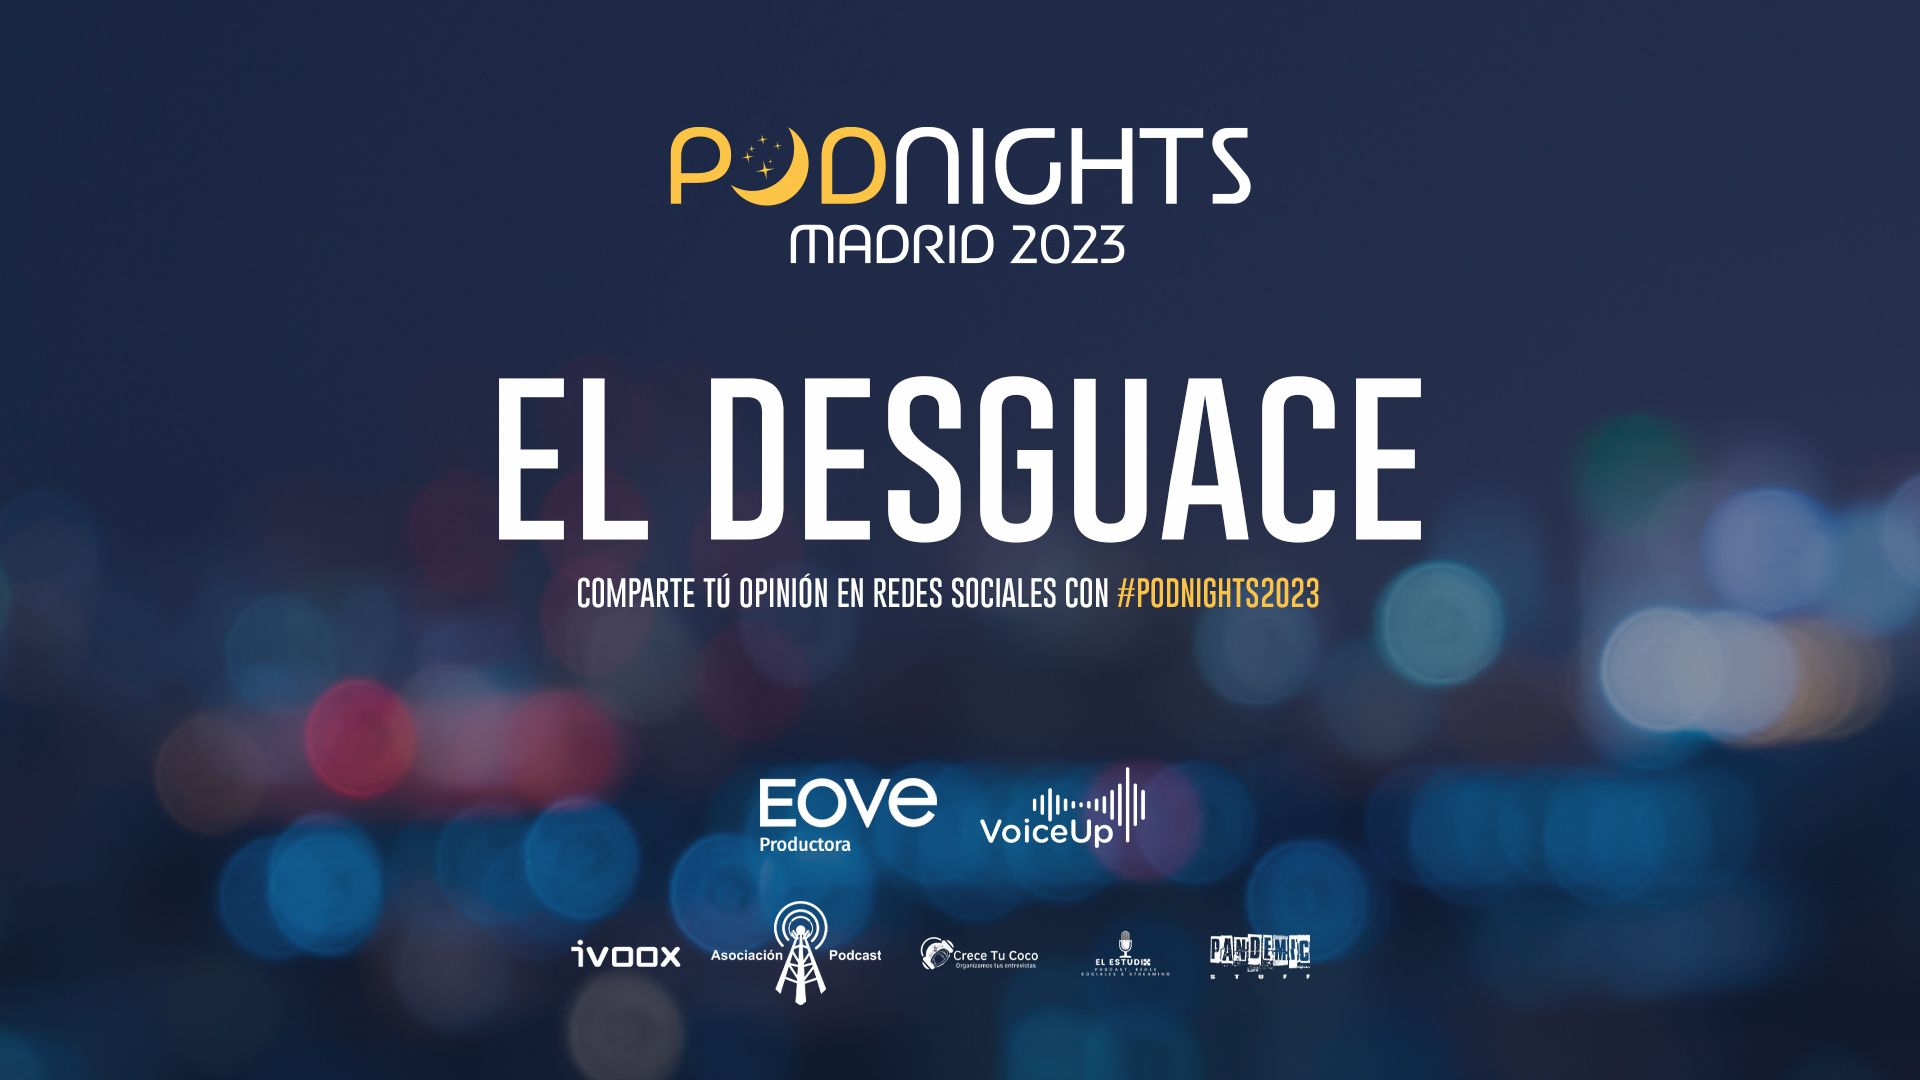 El Desguace en Podnights Madrid